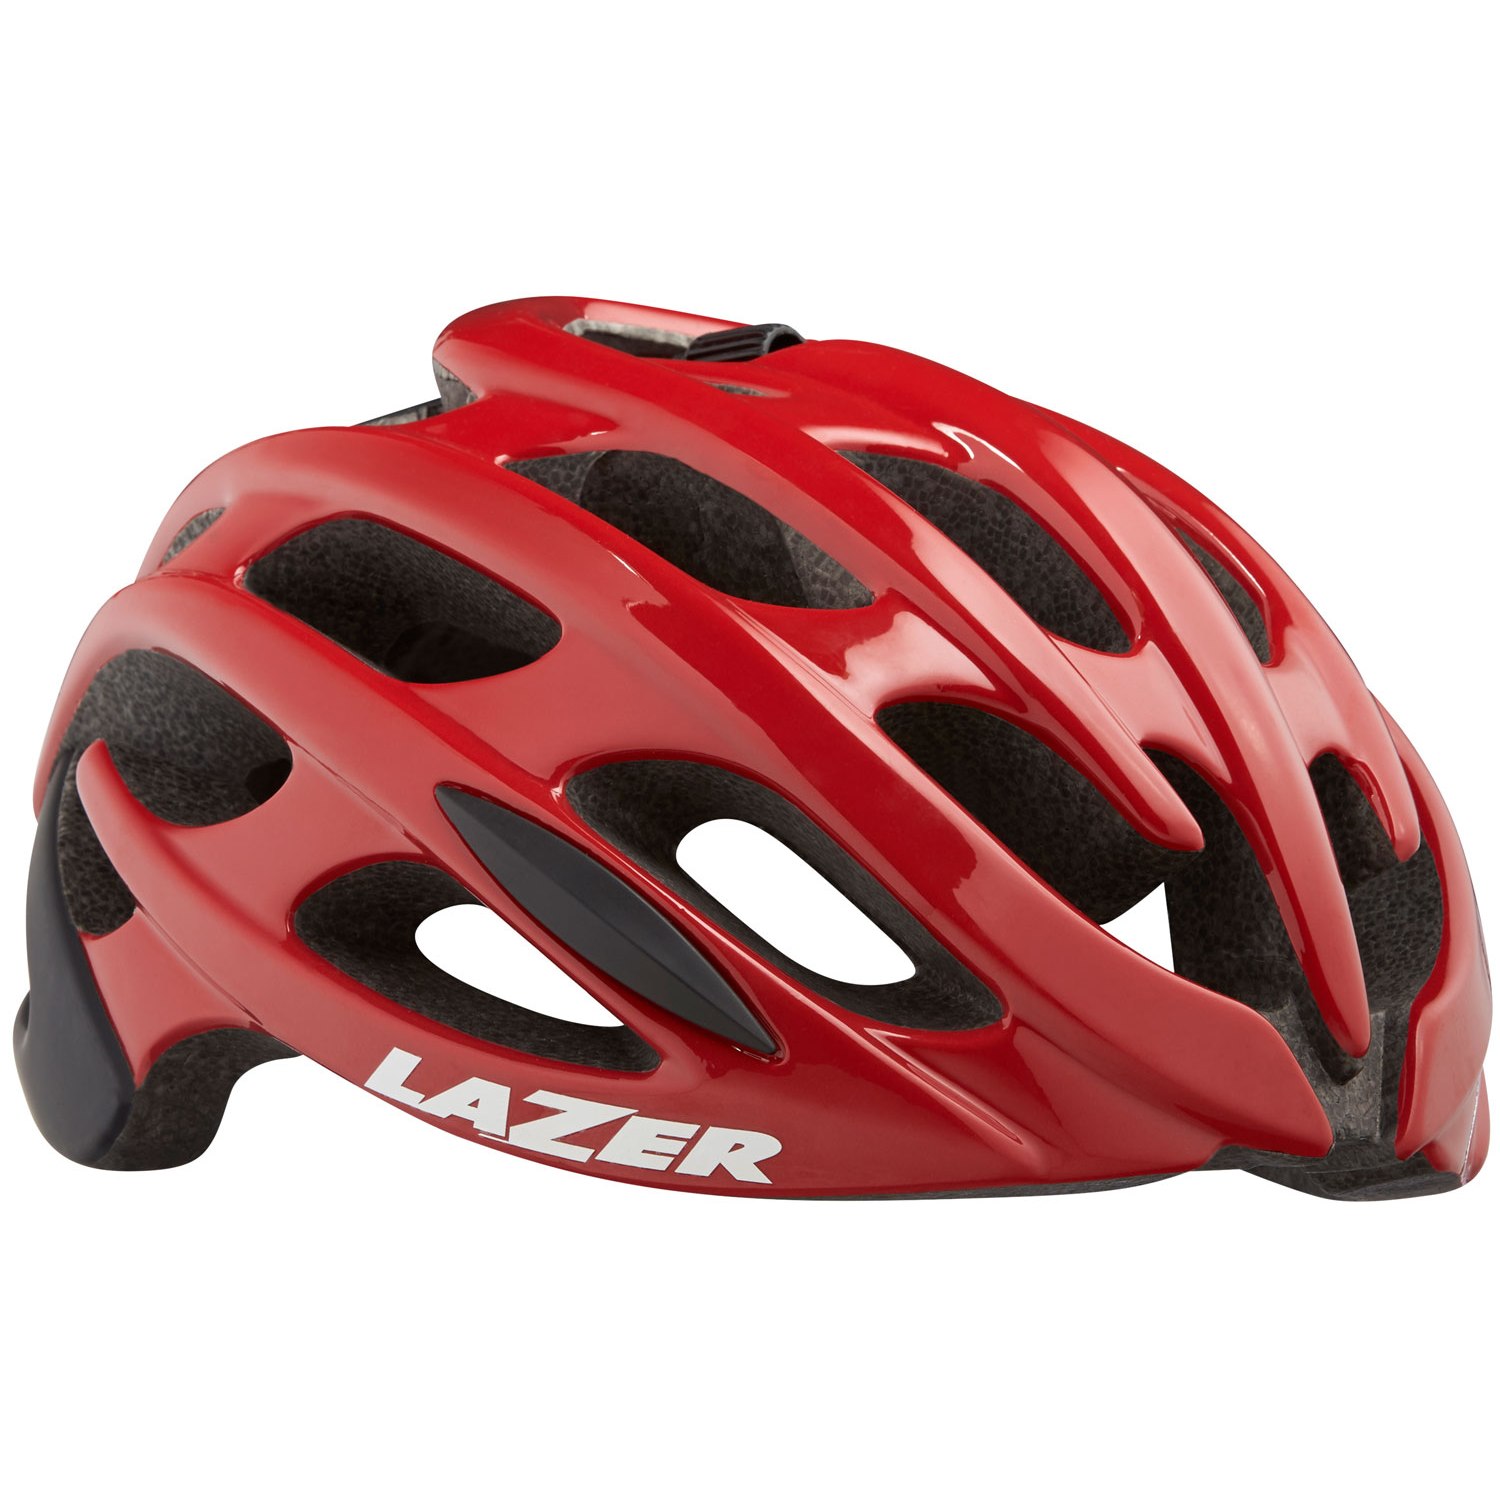 Picture of Lazer Blade+ Helmet - red black